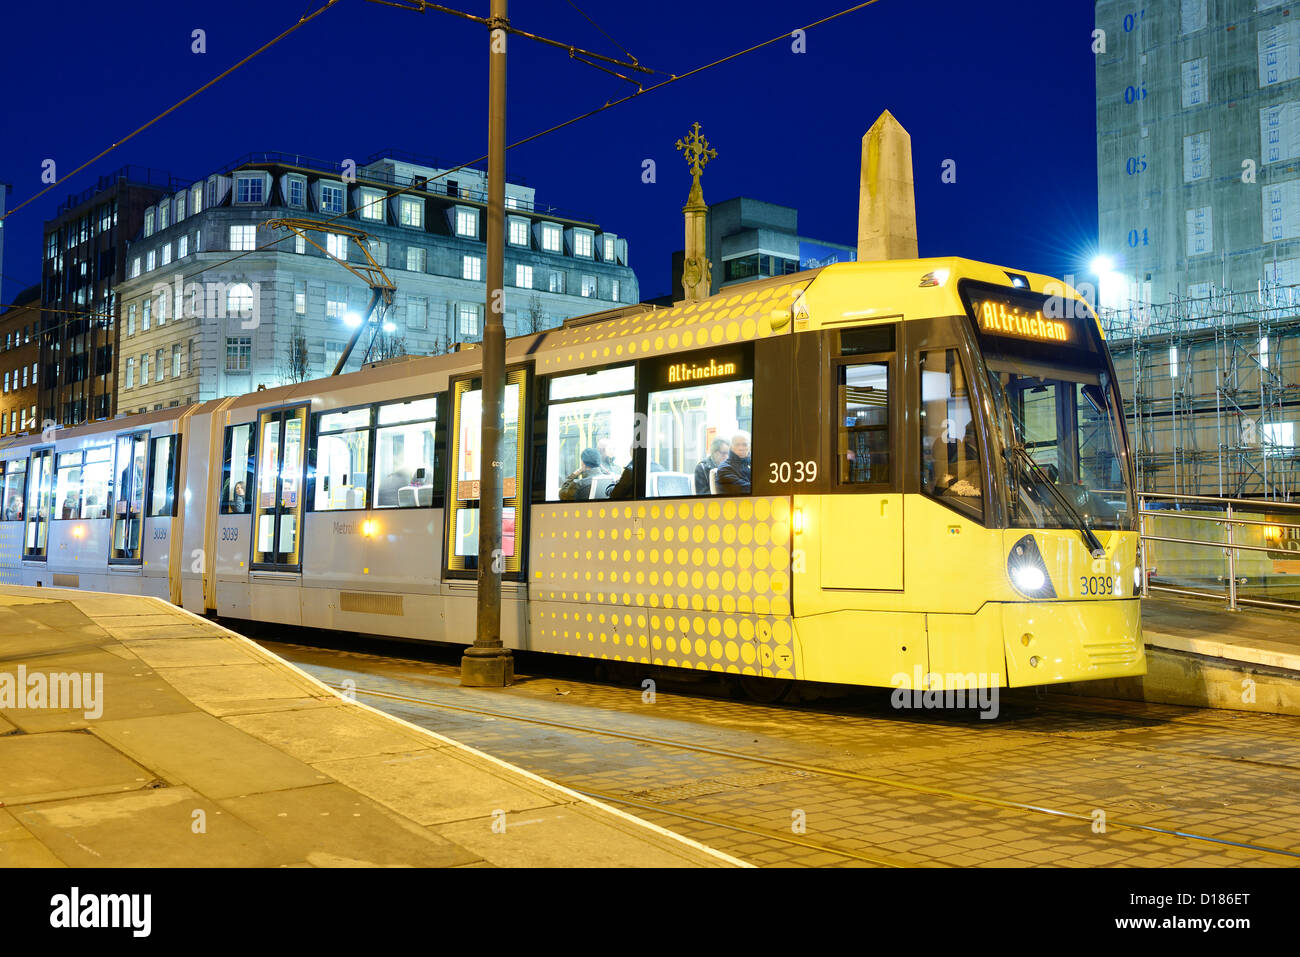 Manchester Metrolink tram de nuit Banque D'Images